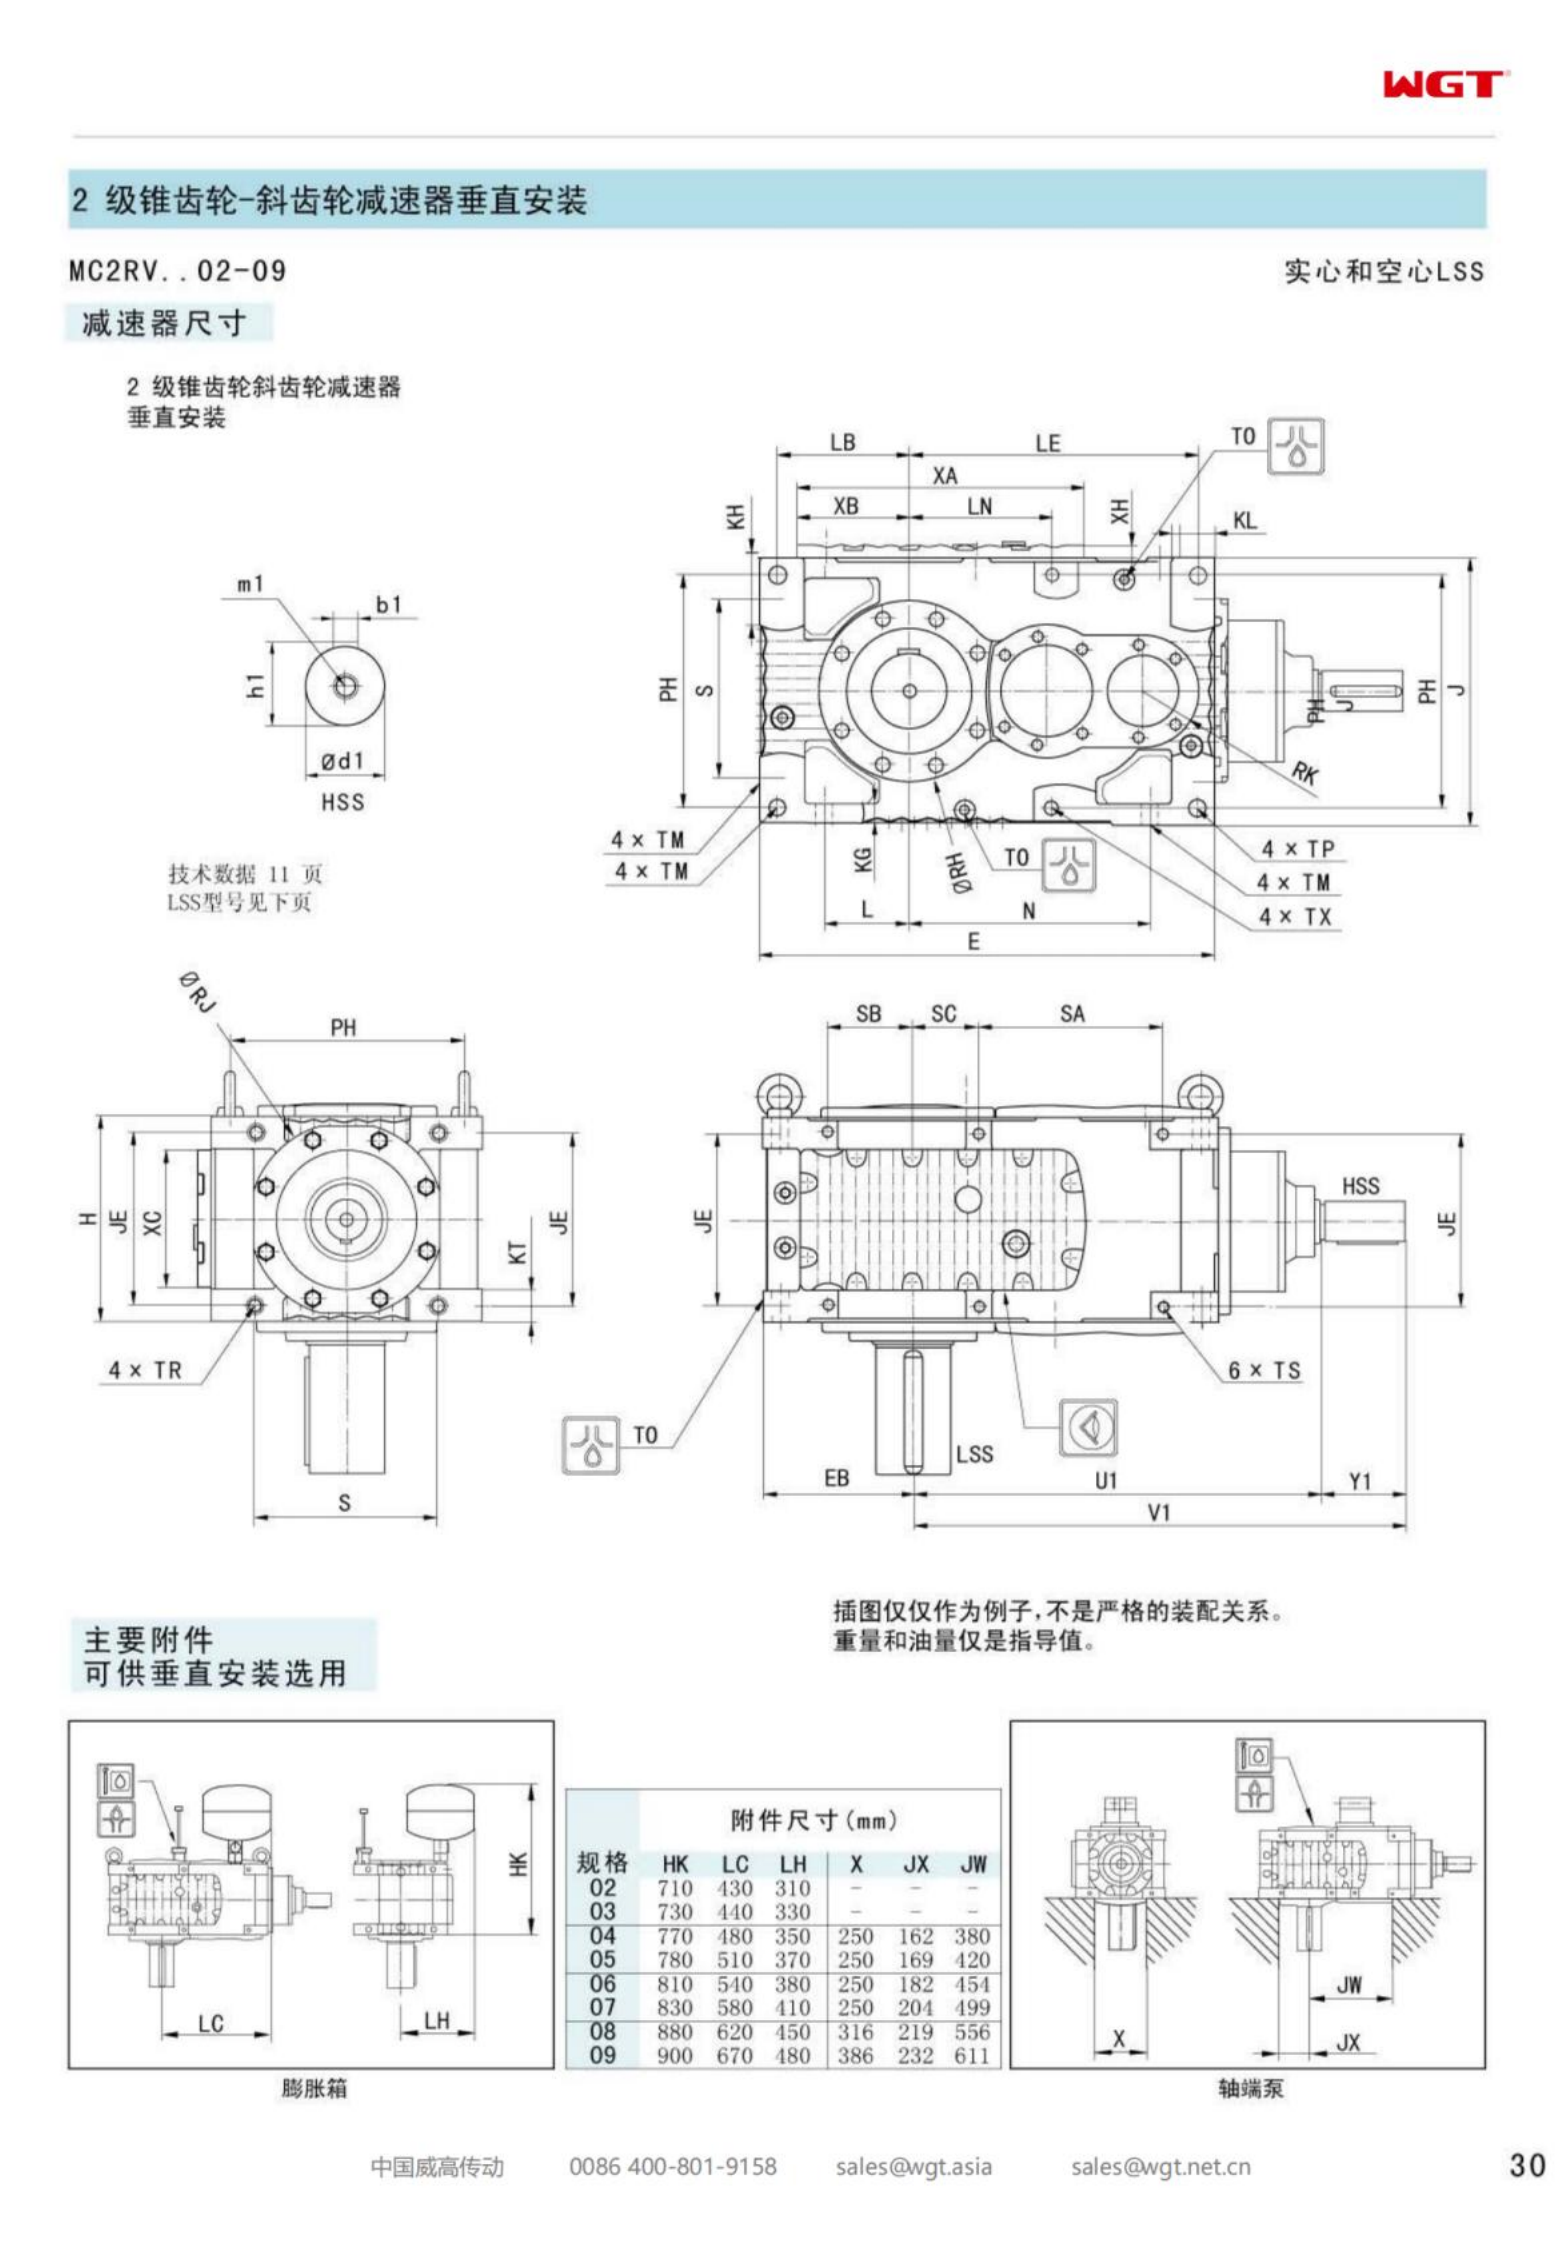 MC2RVSF06 replaces _SEW_MC_Series gearbox (patent)